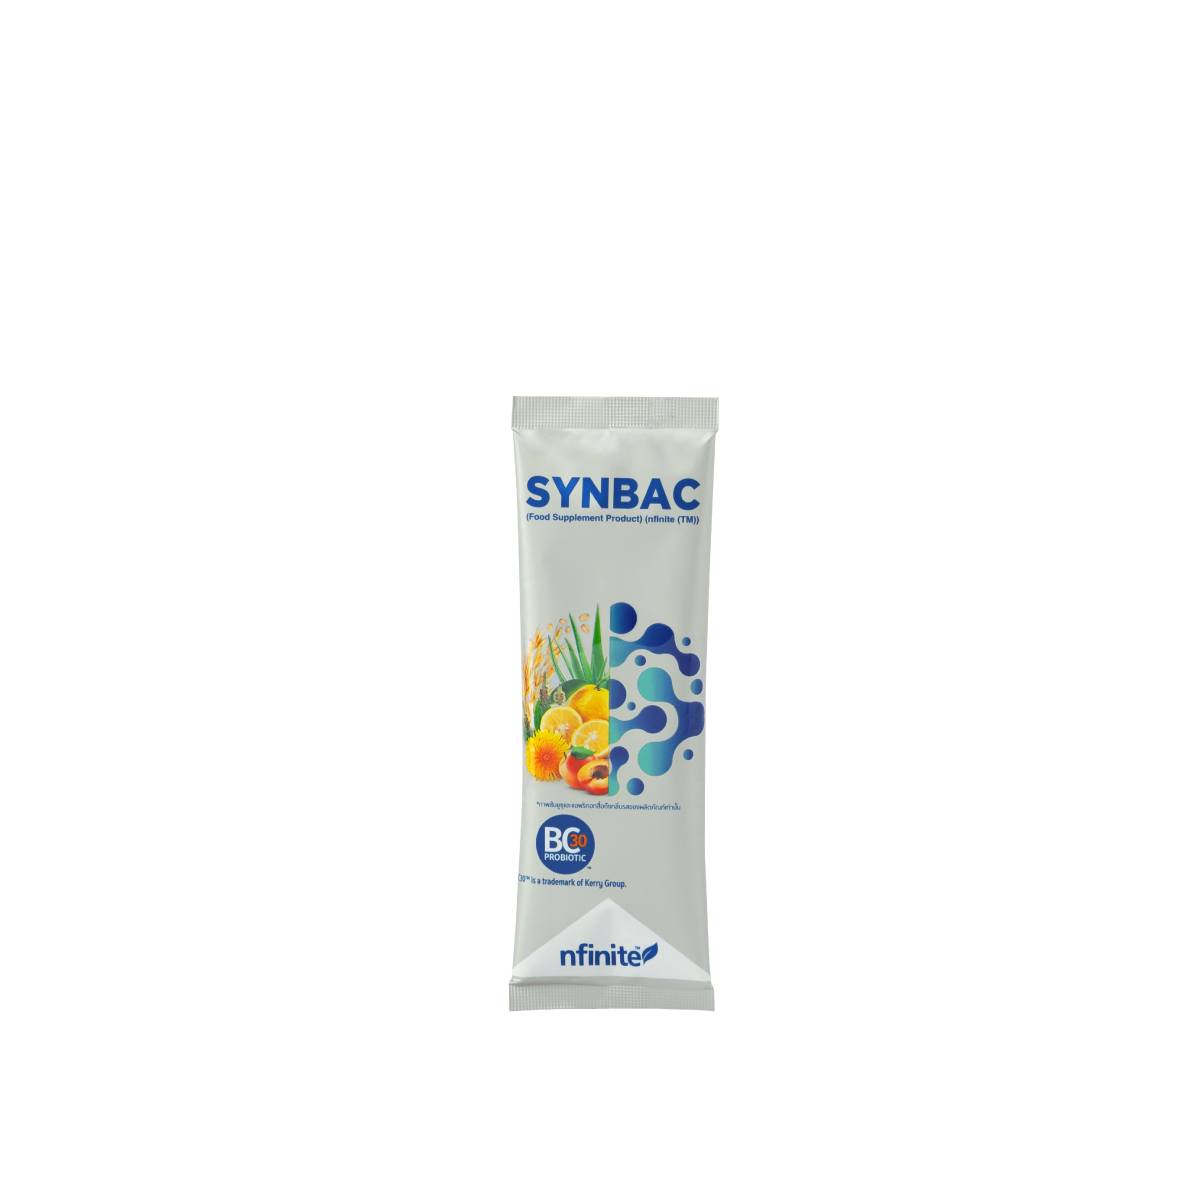 SYNBAC ซินแบค (ผลิตภัณฑ์เสริมอาหาร) น้ำหนักสุทธิ 105 กรัม (15 กรัม x 7 ซอง)  | Lazada.co.th